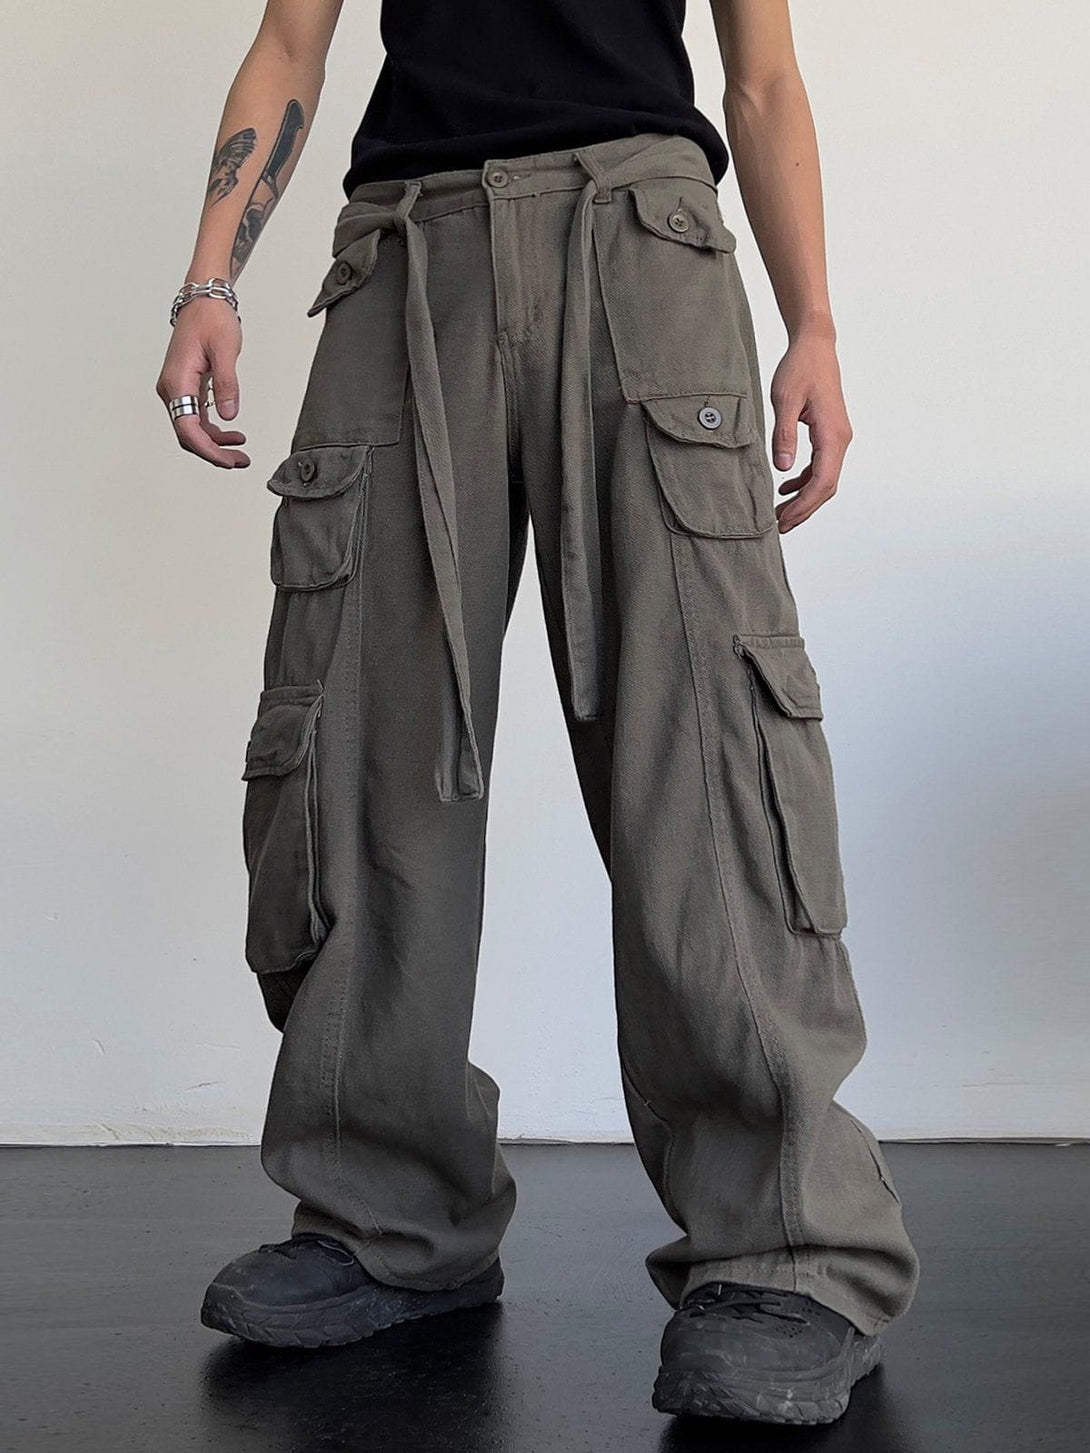 Majesda® - Large Pocket Webbing Cargo Pants outfit ideas streetwear fashion